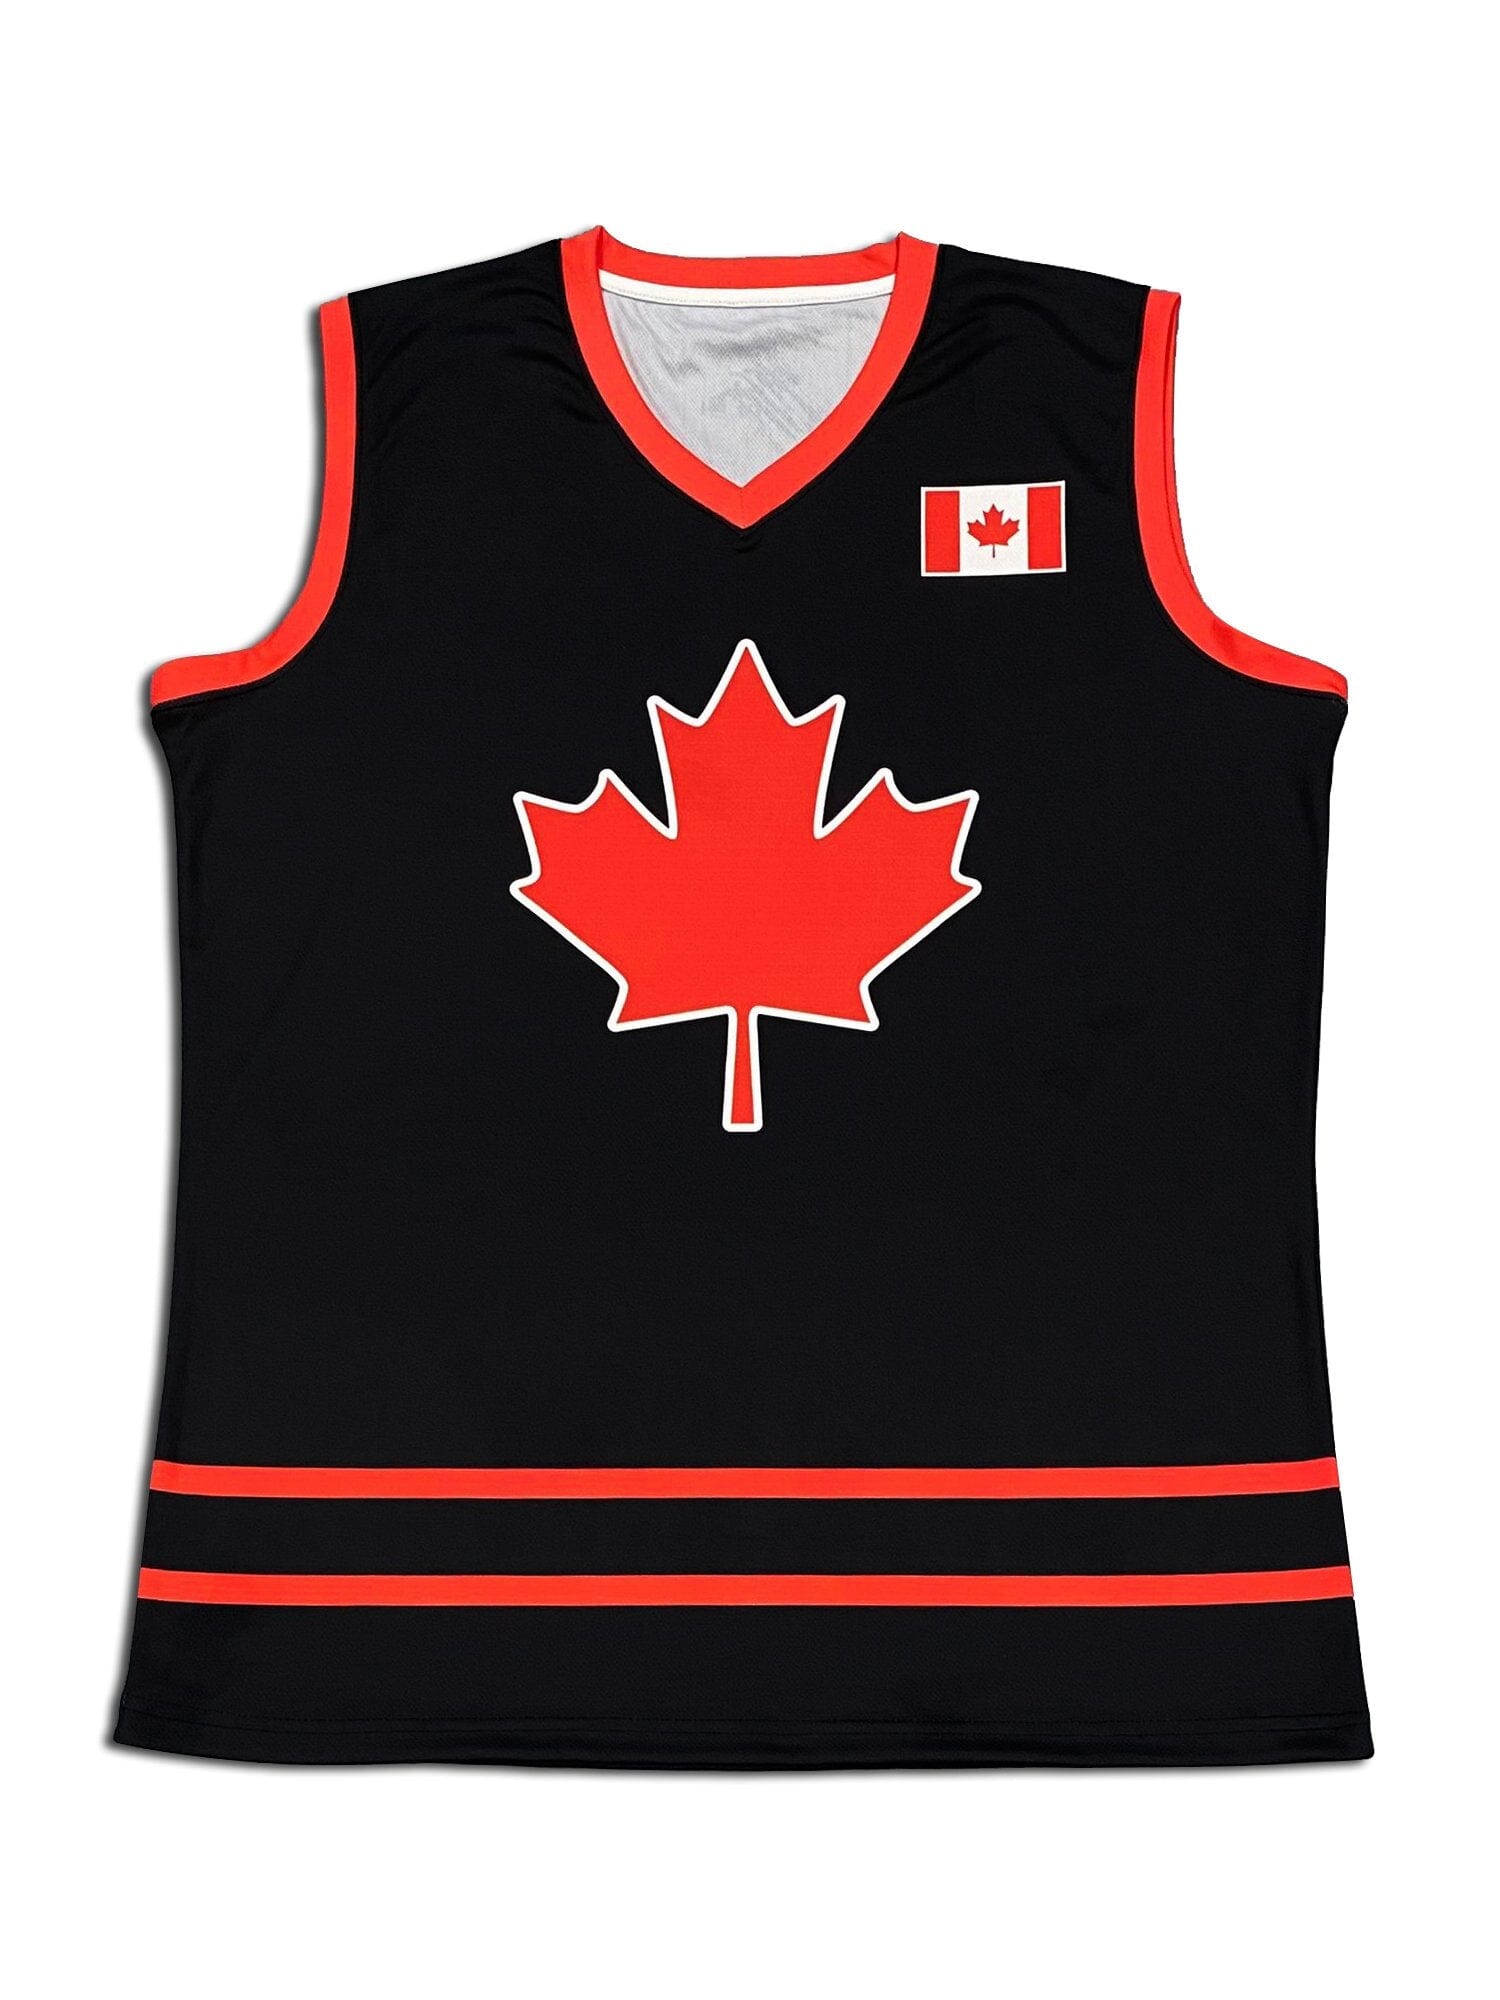 Toronto Maple Leafs Black Jersey Canada